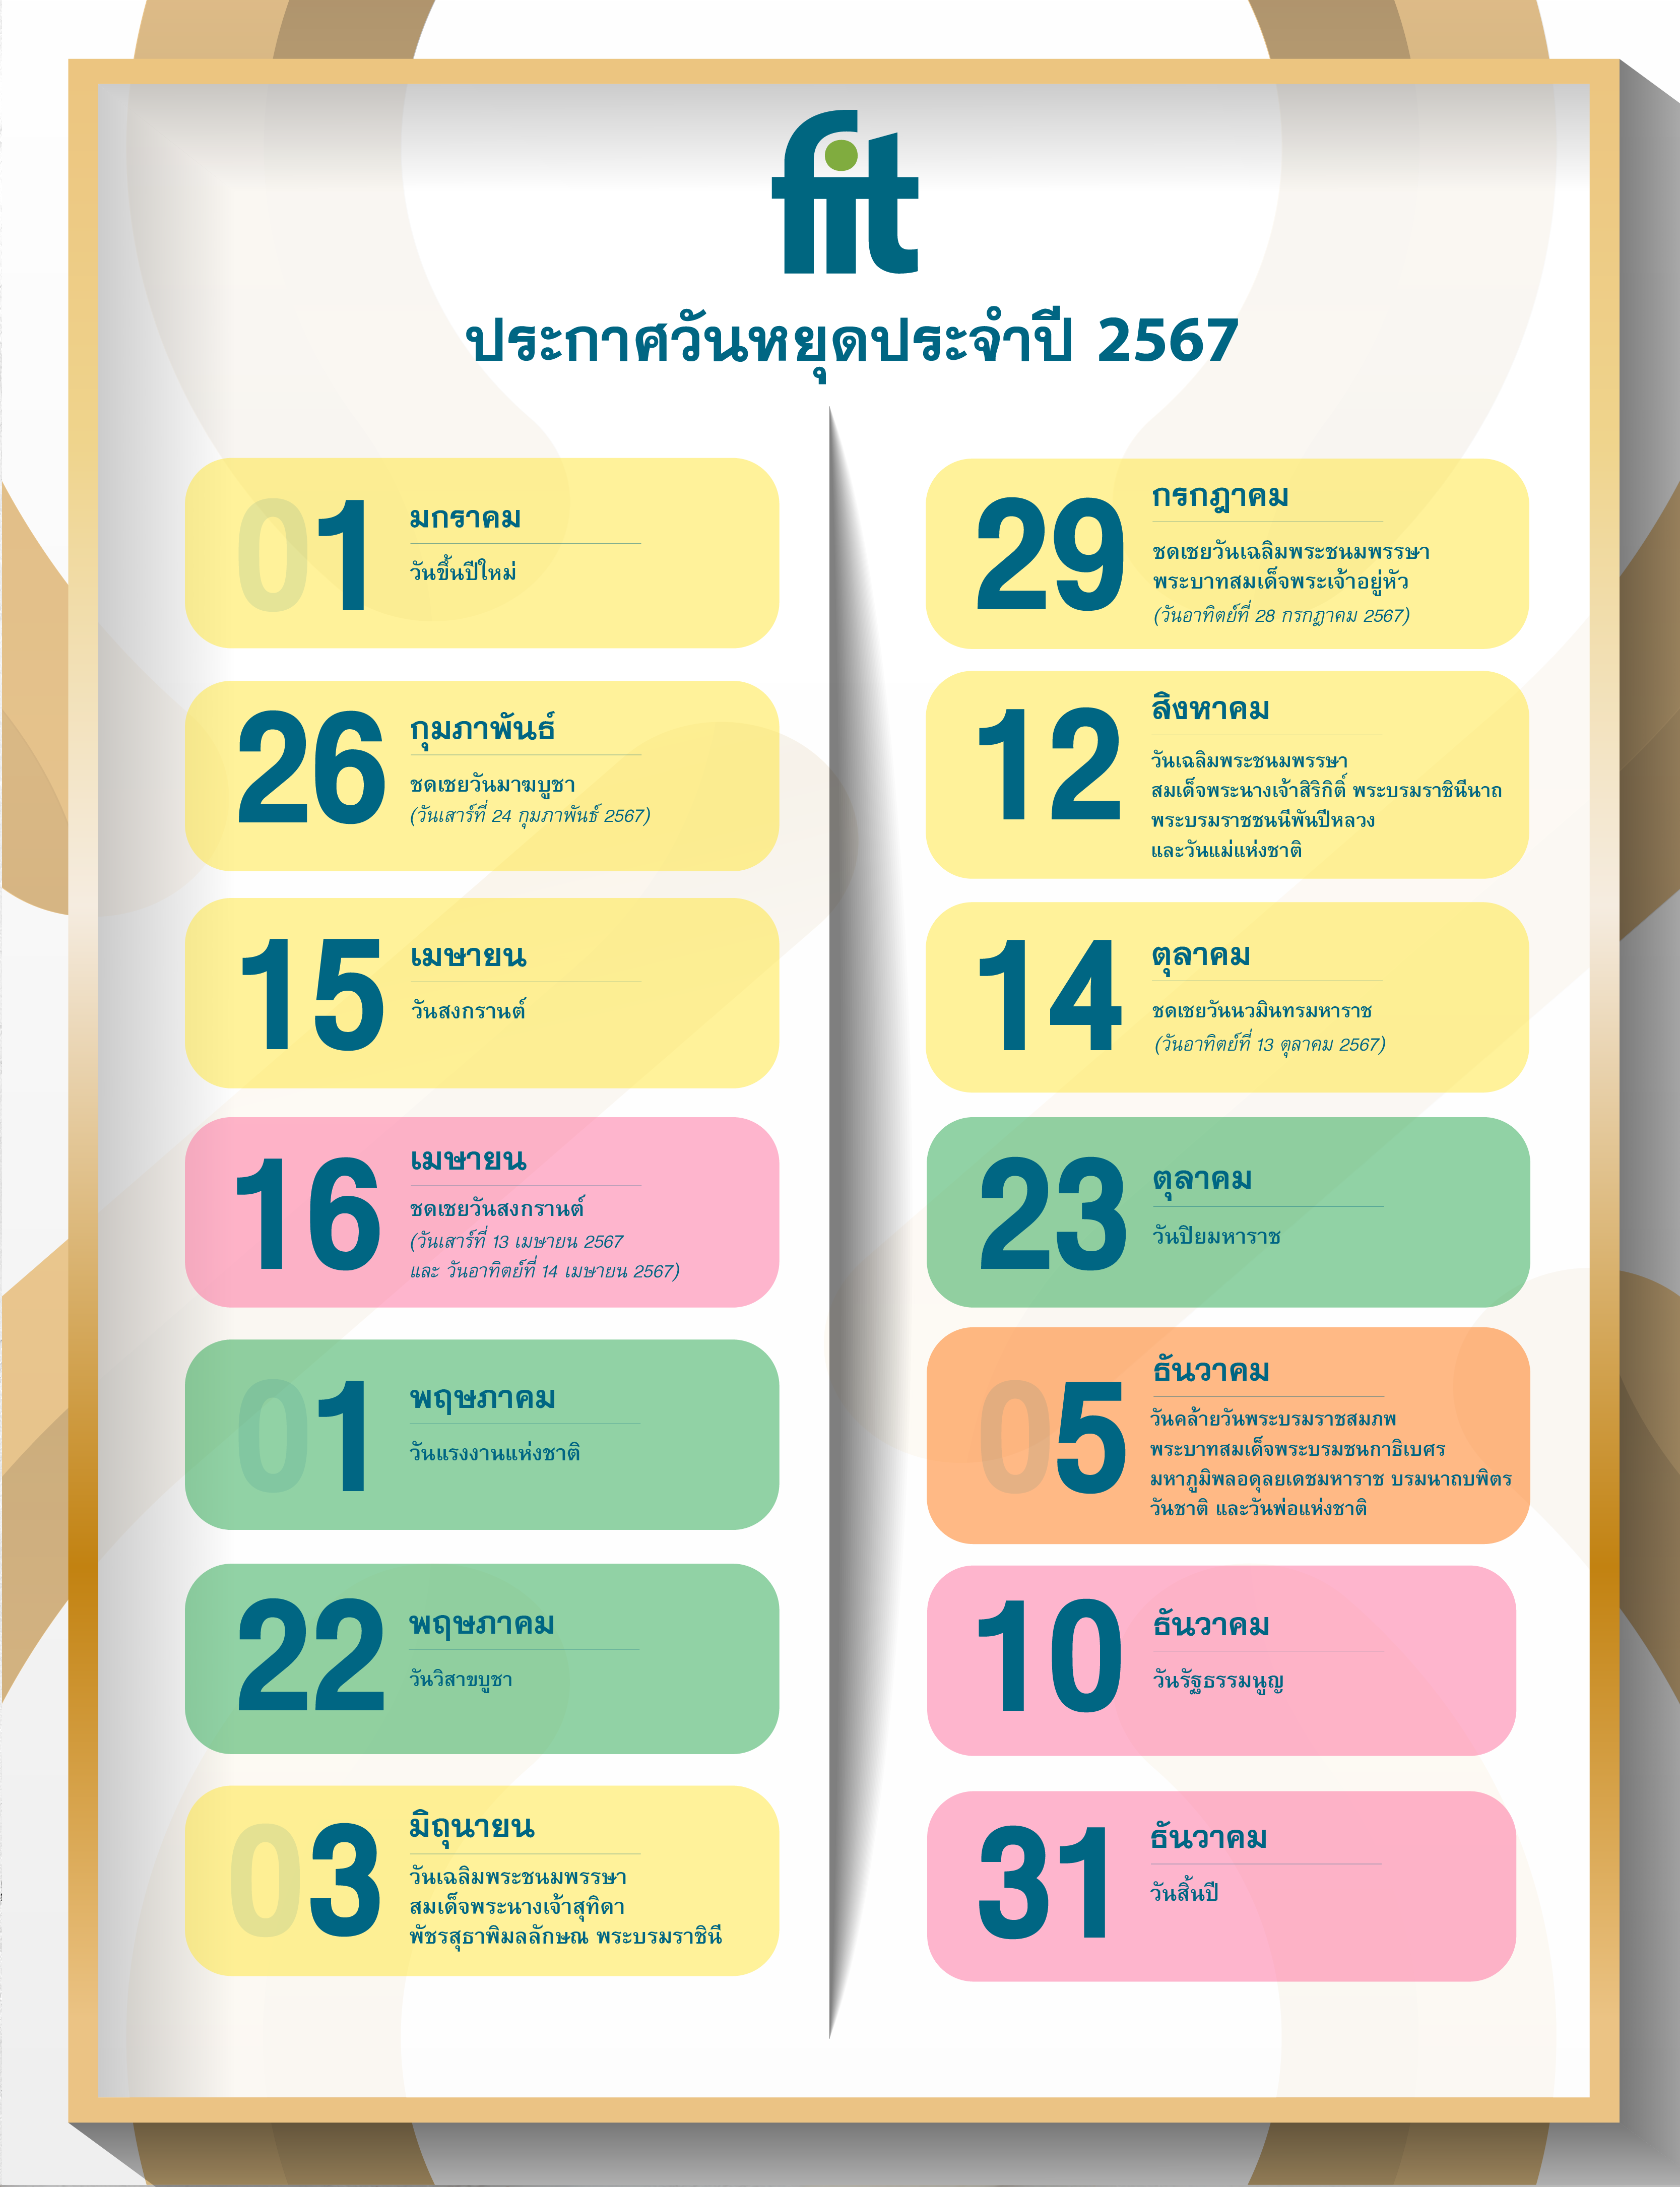 2024 Thai Public Holiday